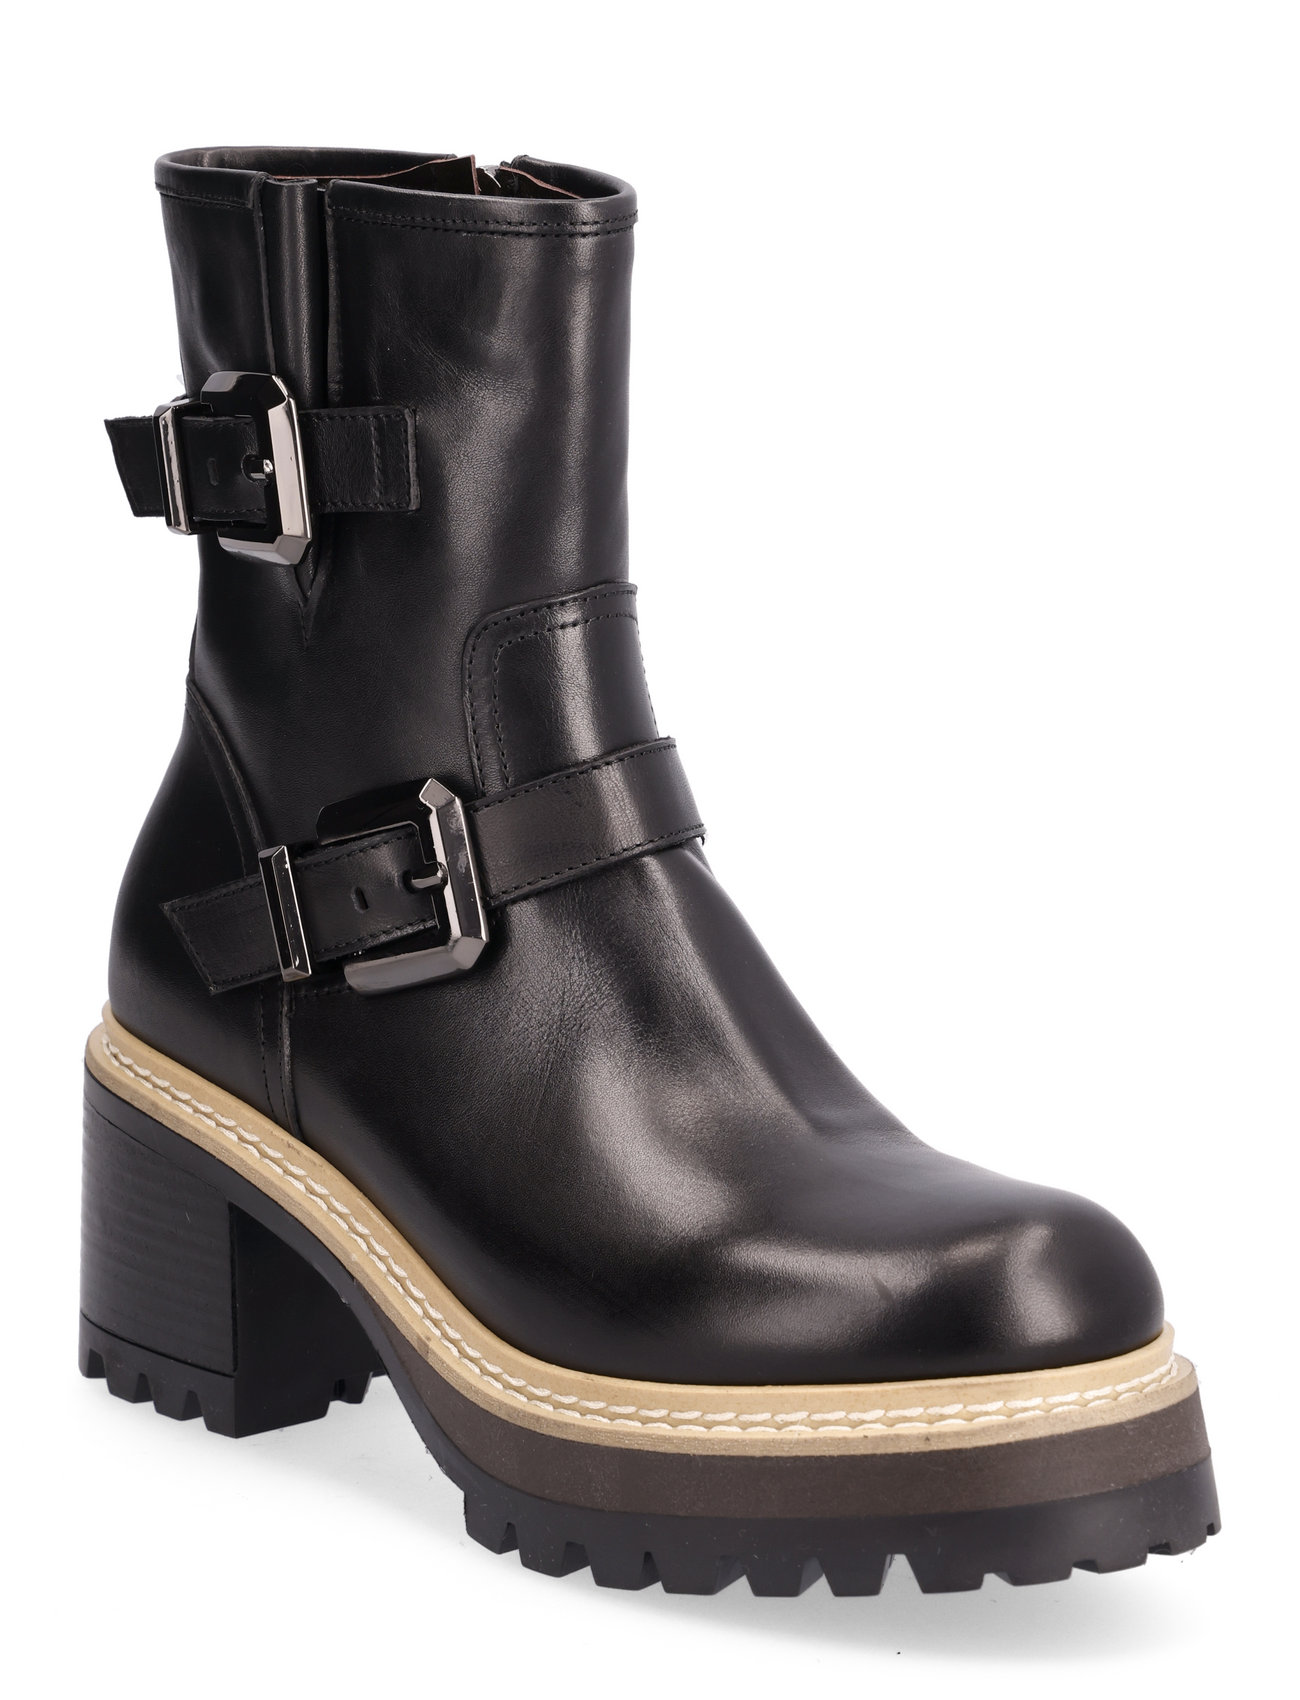 Laura Bellariva Boots - Heeled ankle boots - Boozt.com